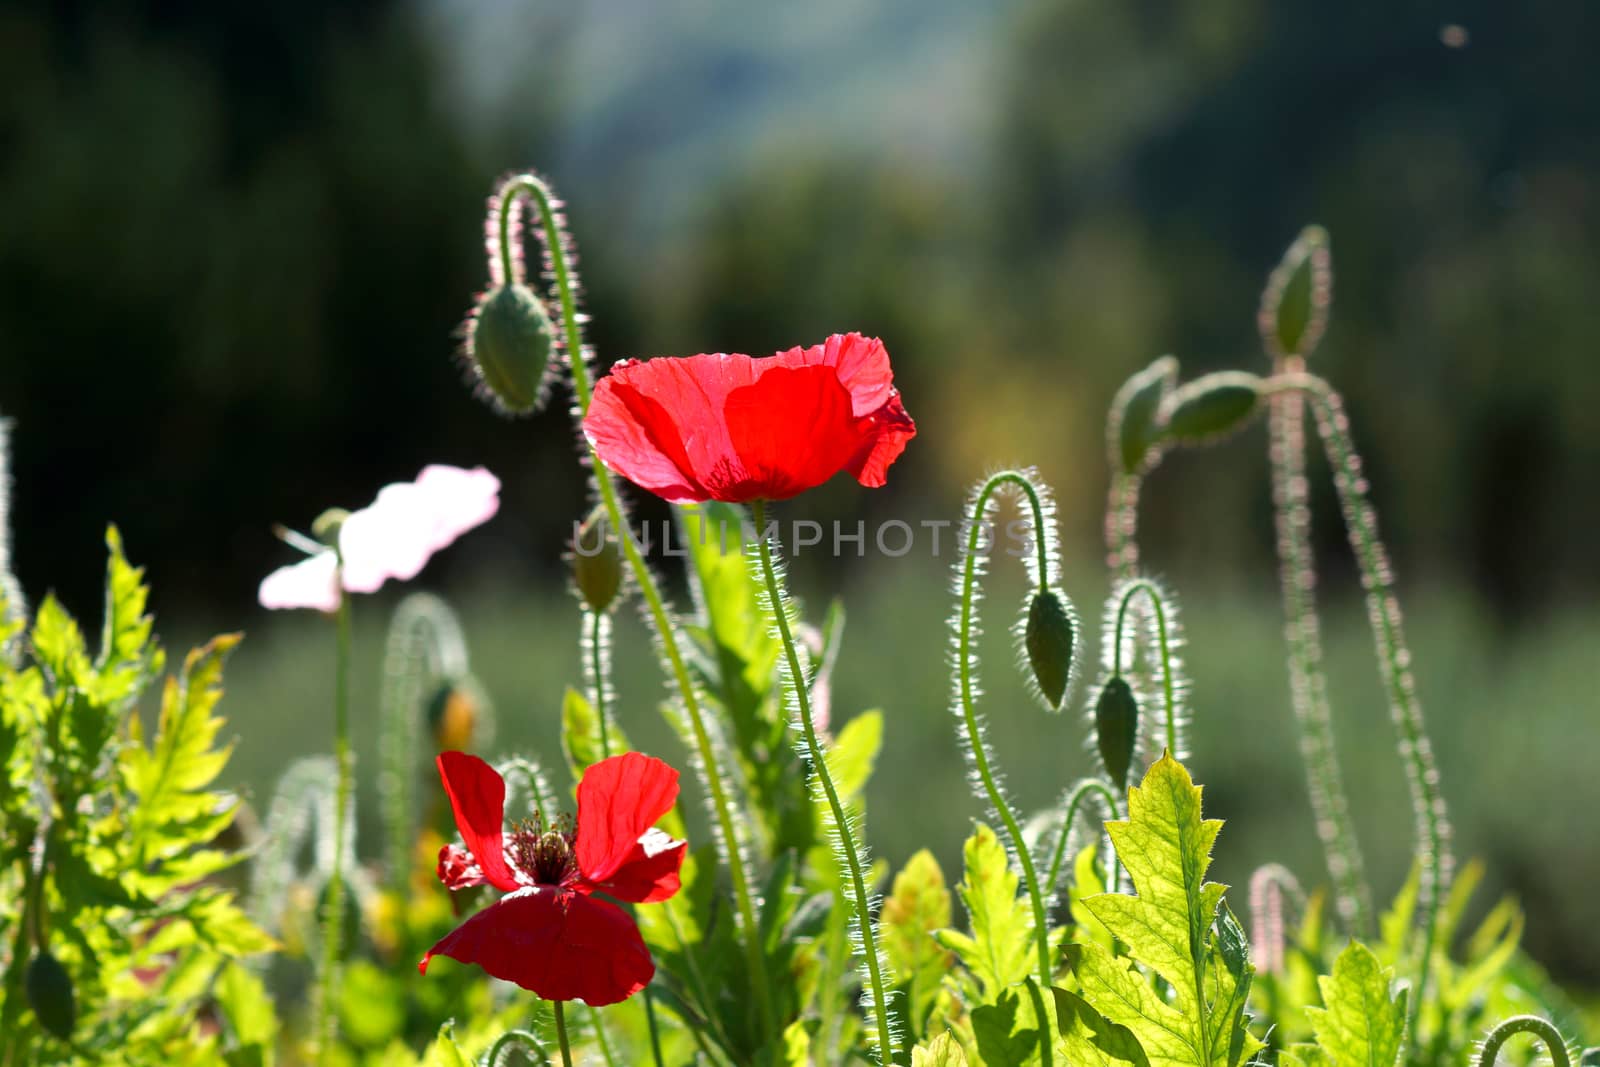 Poppy flowers in the garden by Noppharat_th